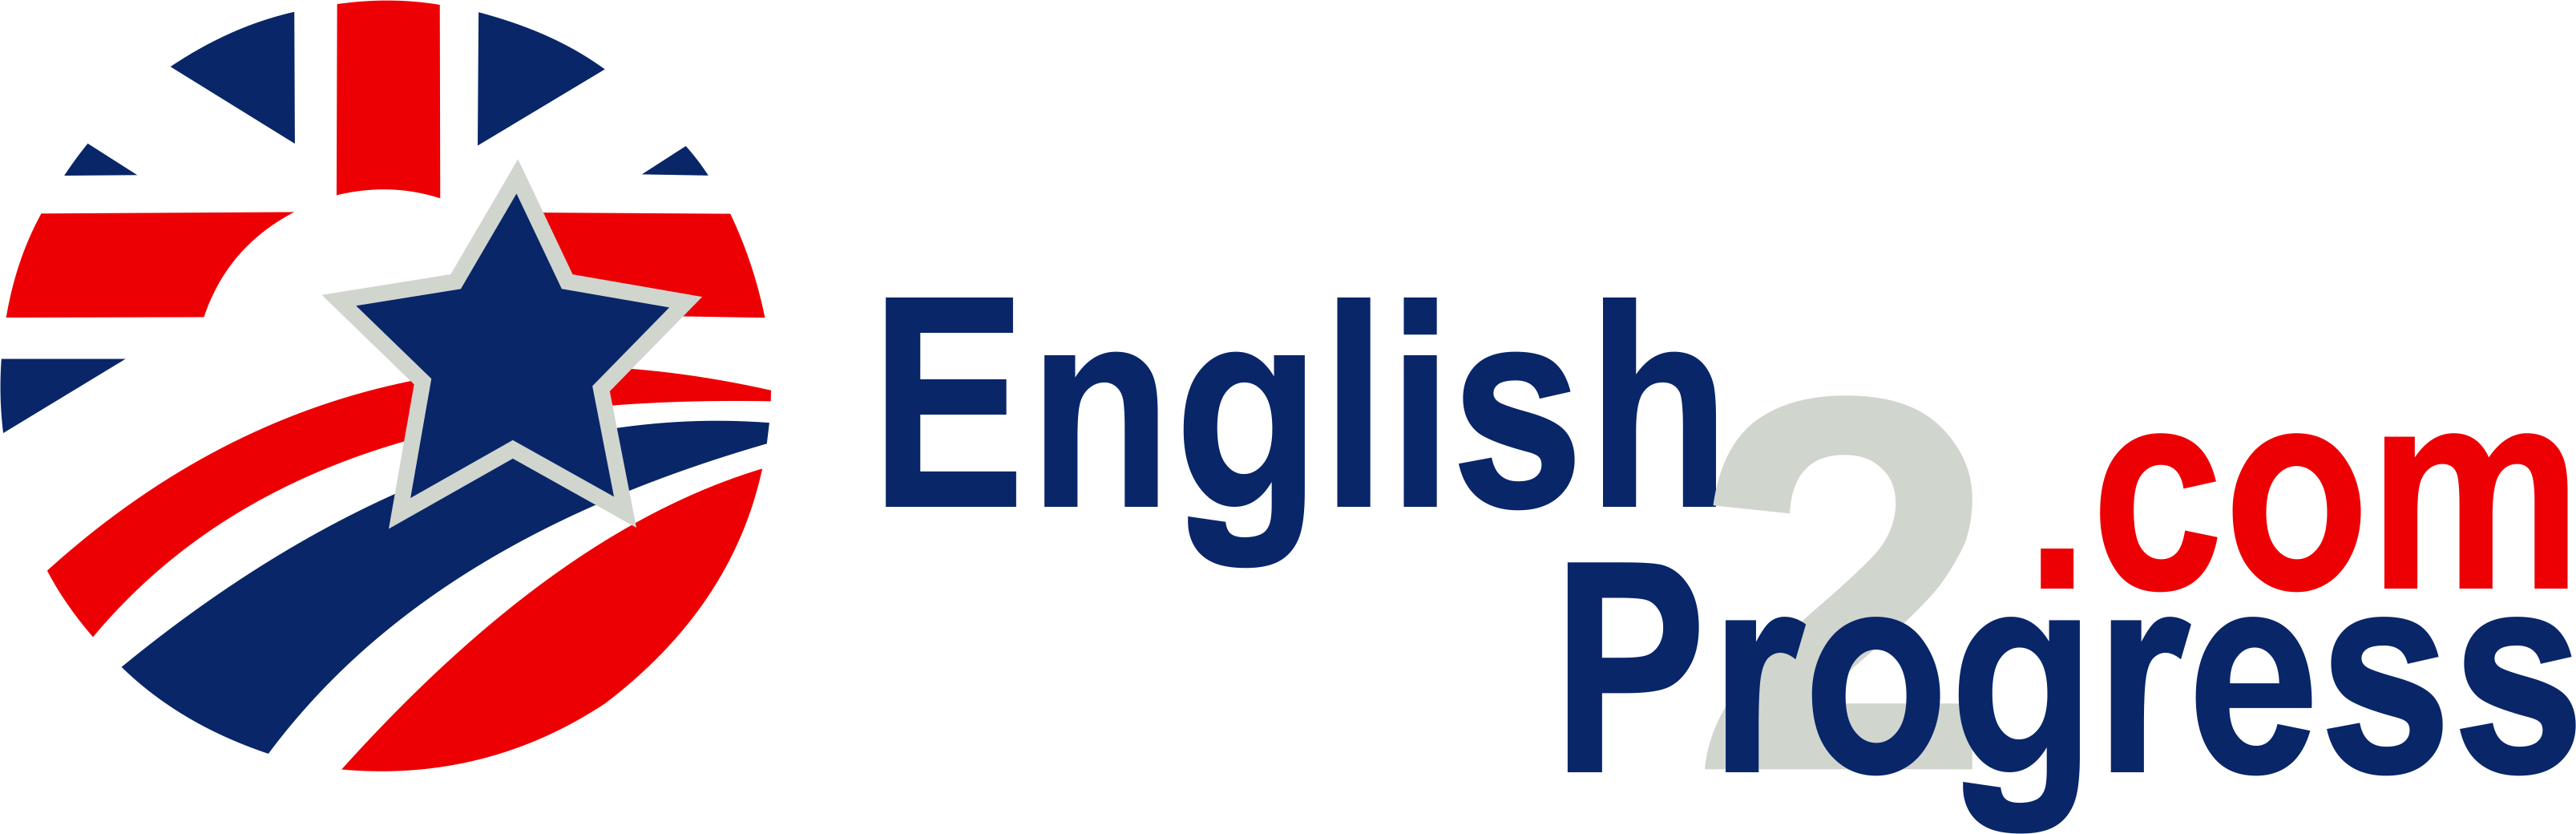 Ingles Logo - Logo En Ingles Vector And Clip Art Inspiration Logo Image